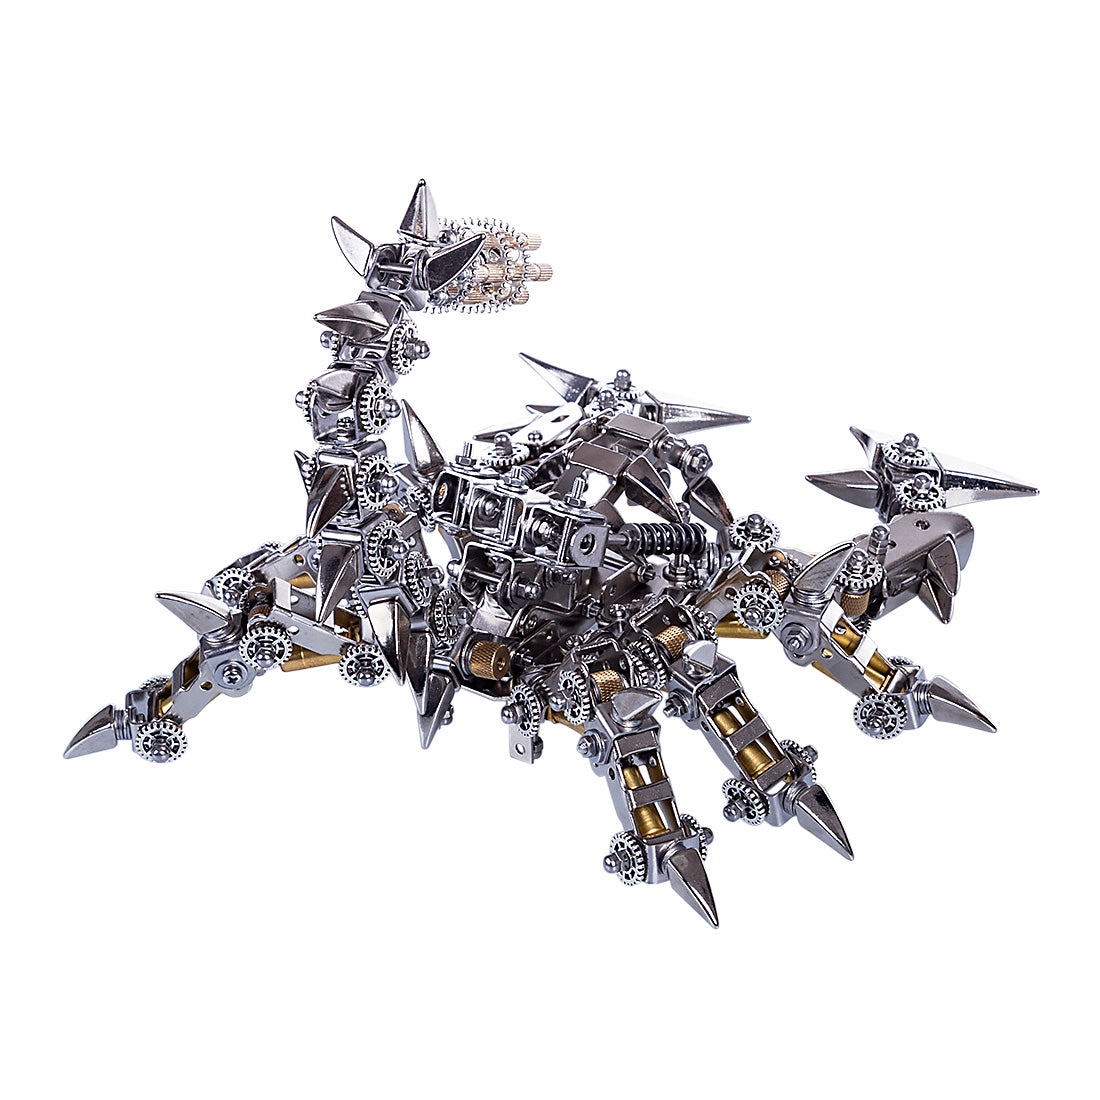  Metalkitor 3D Metal Puzzle Model Kit - Mechanical